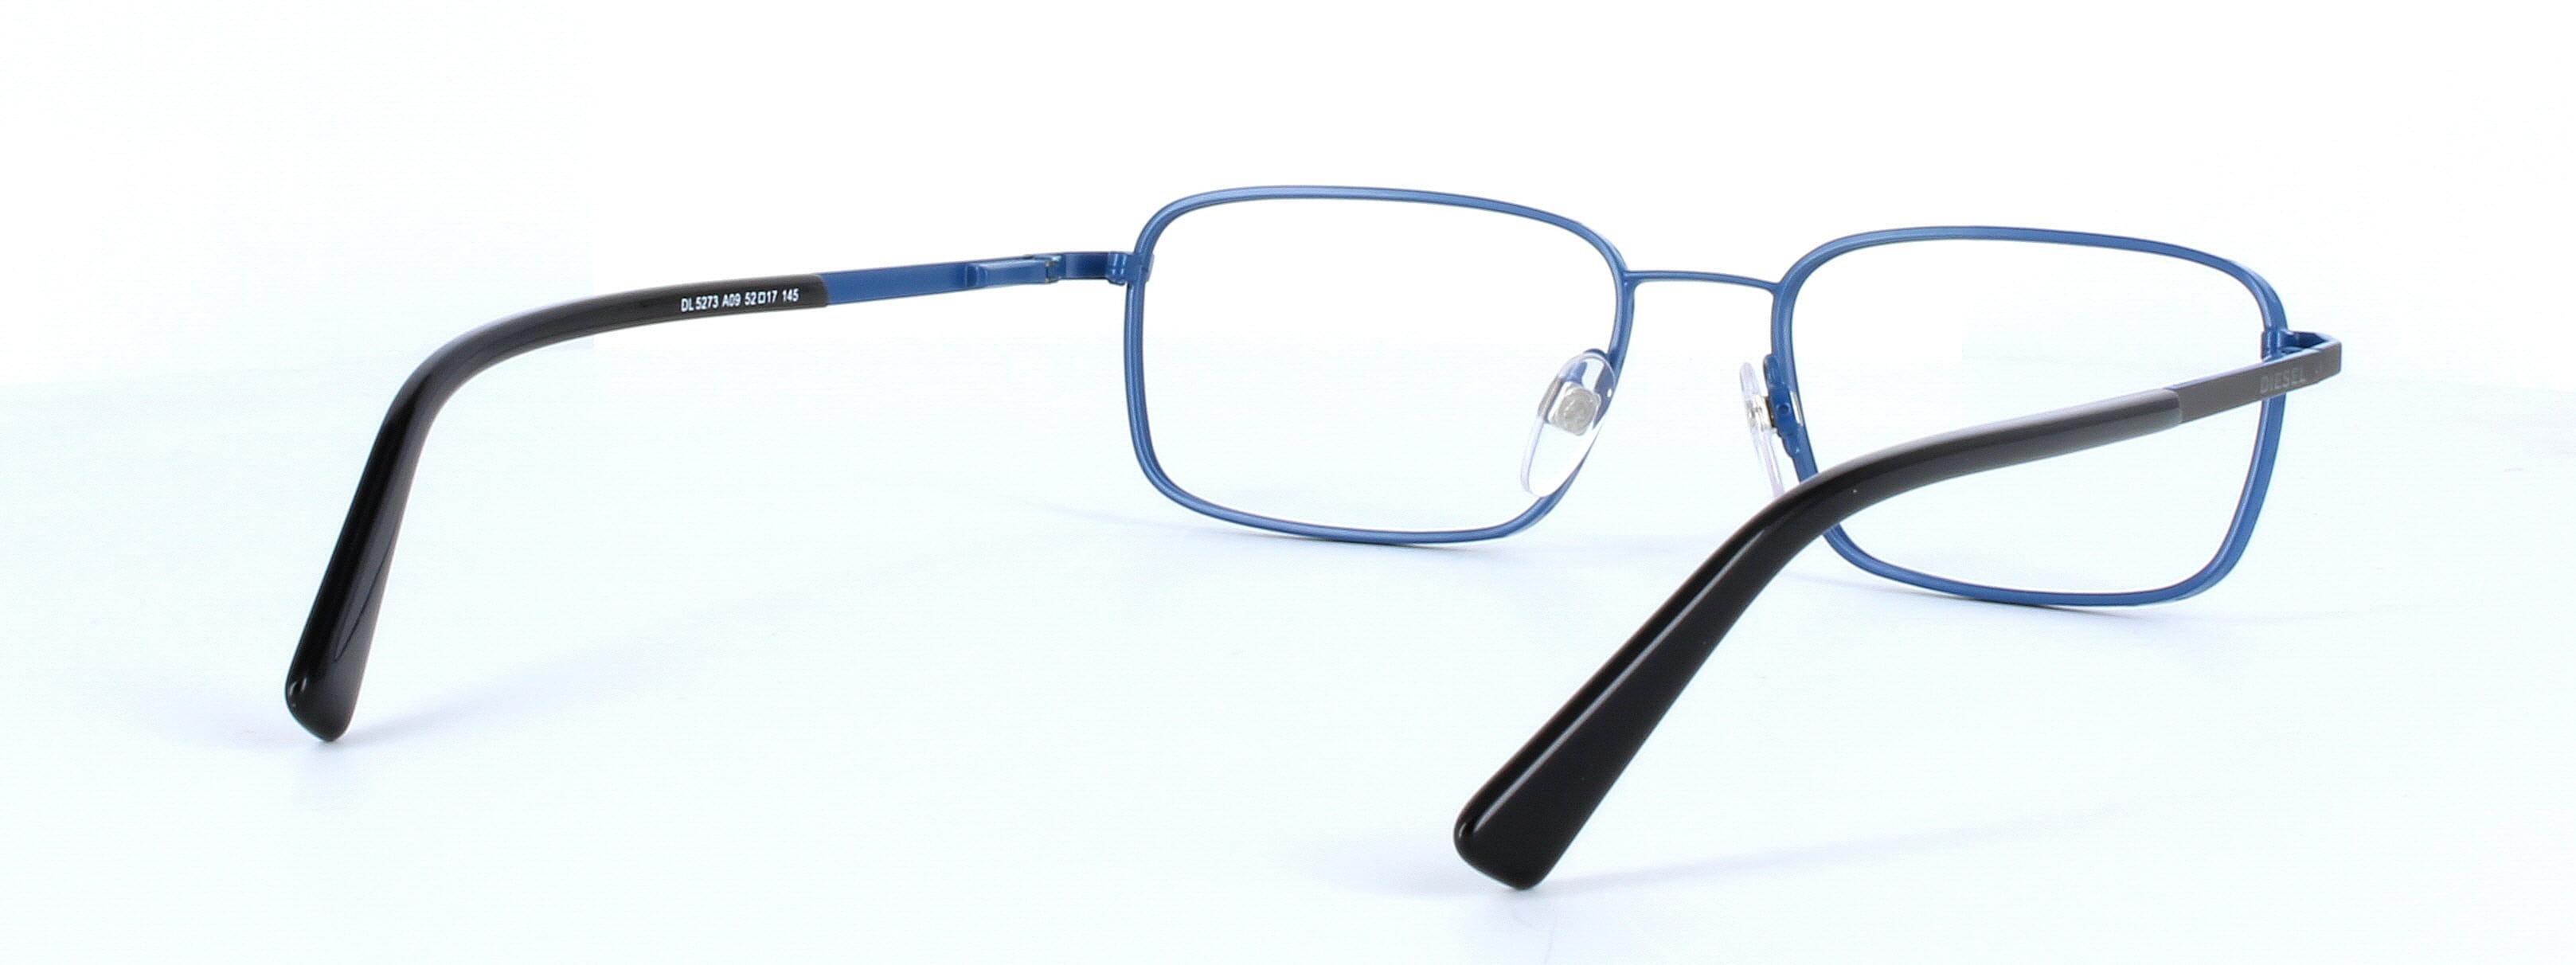 Diesel 5273 - Unisex designer glasses - 2 tone full rim rectangular shaped metal frame on gunmetal and blue - image view 4